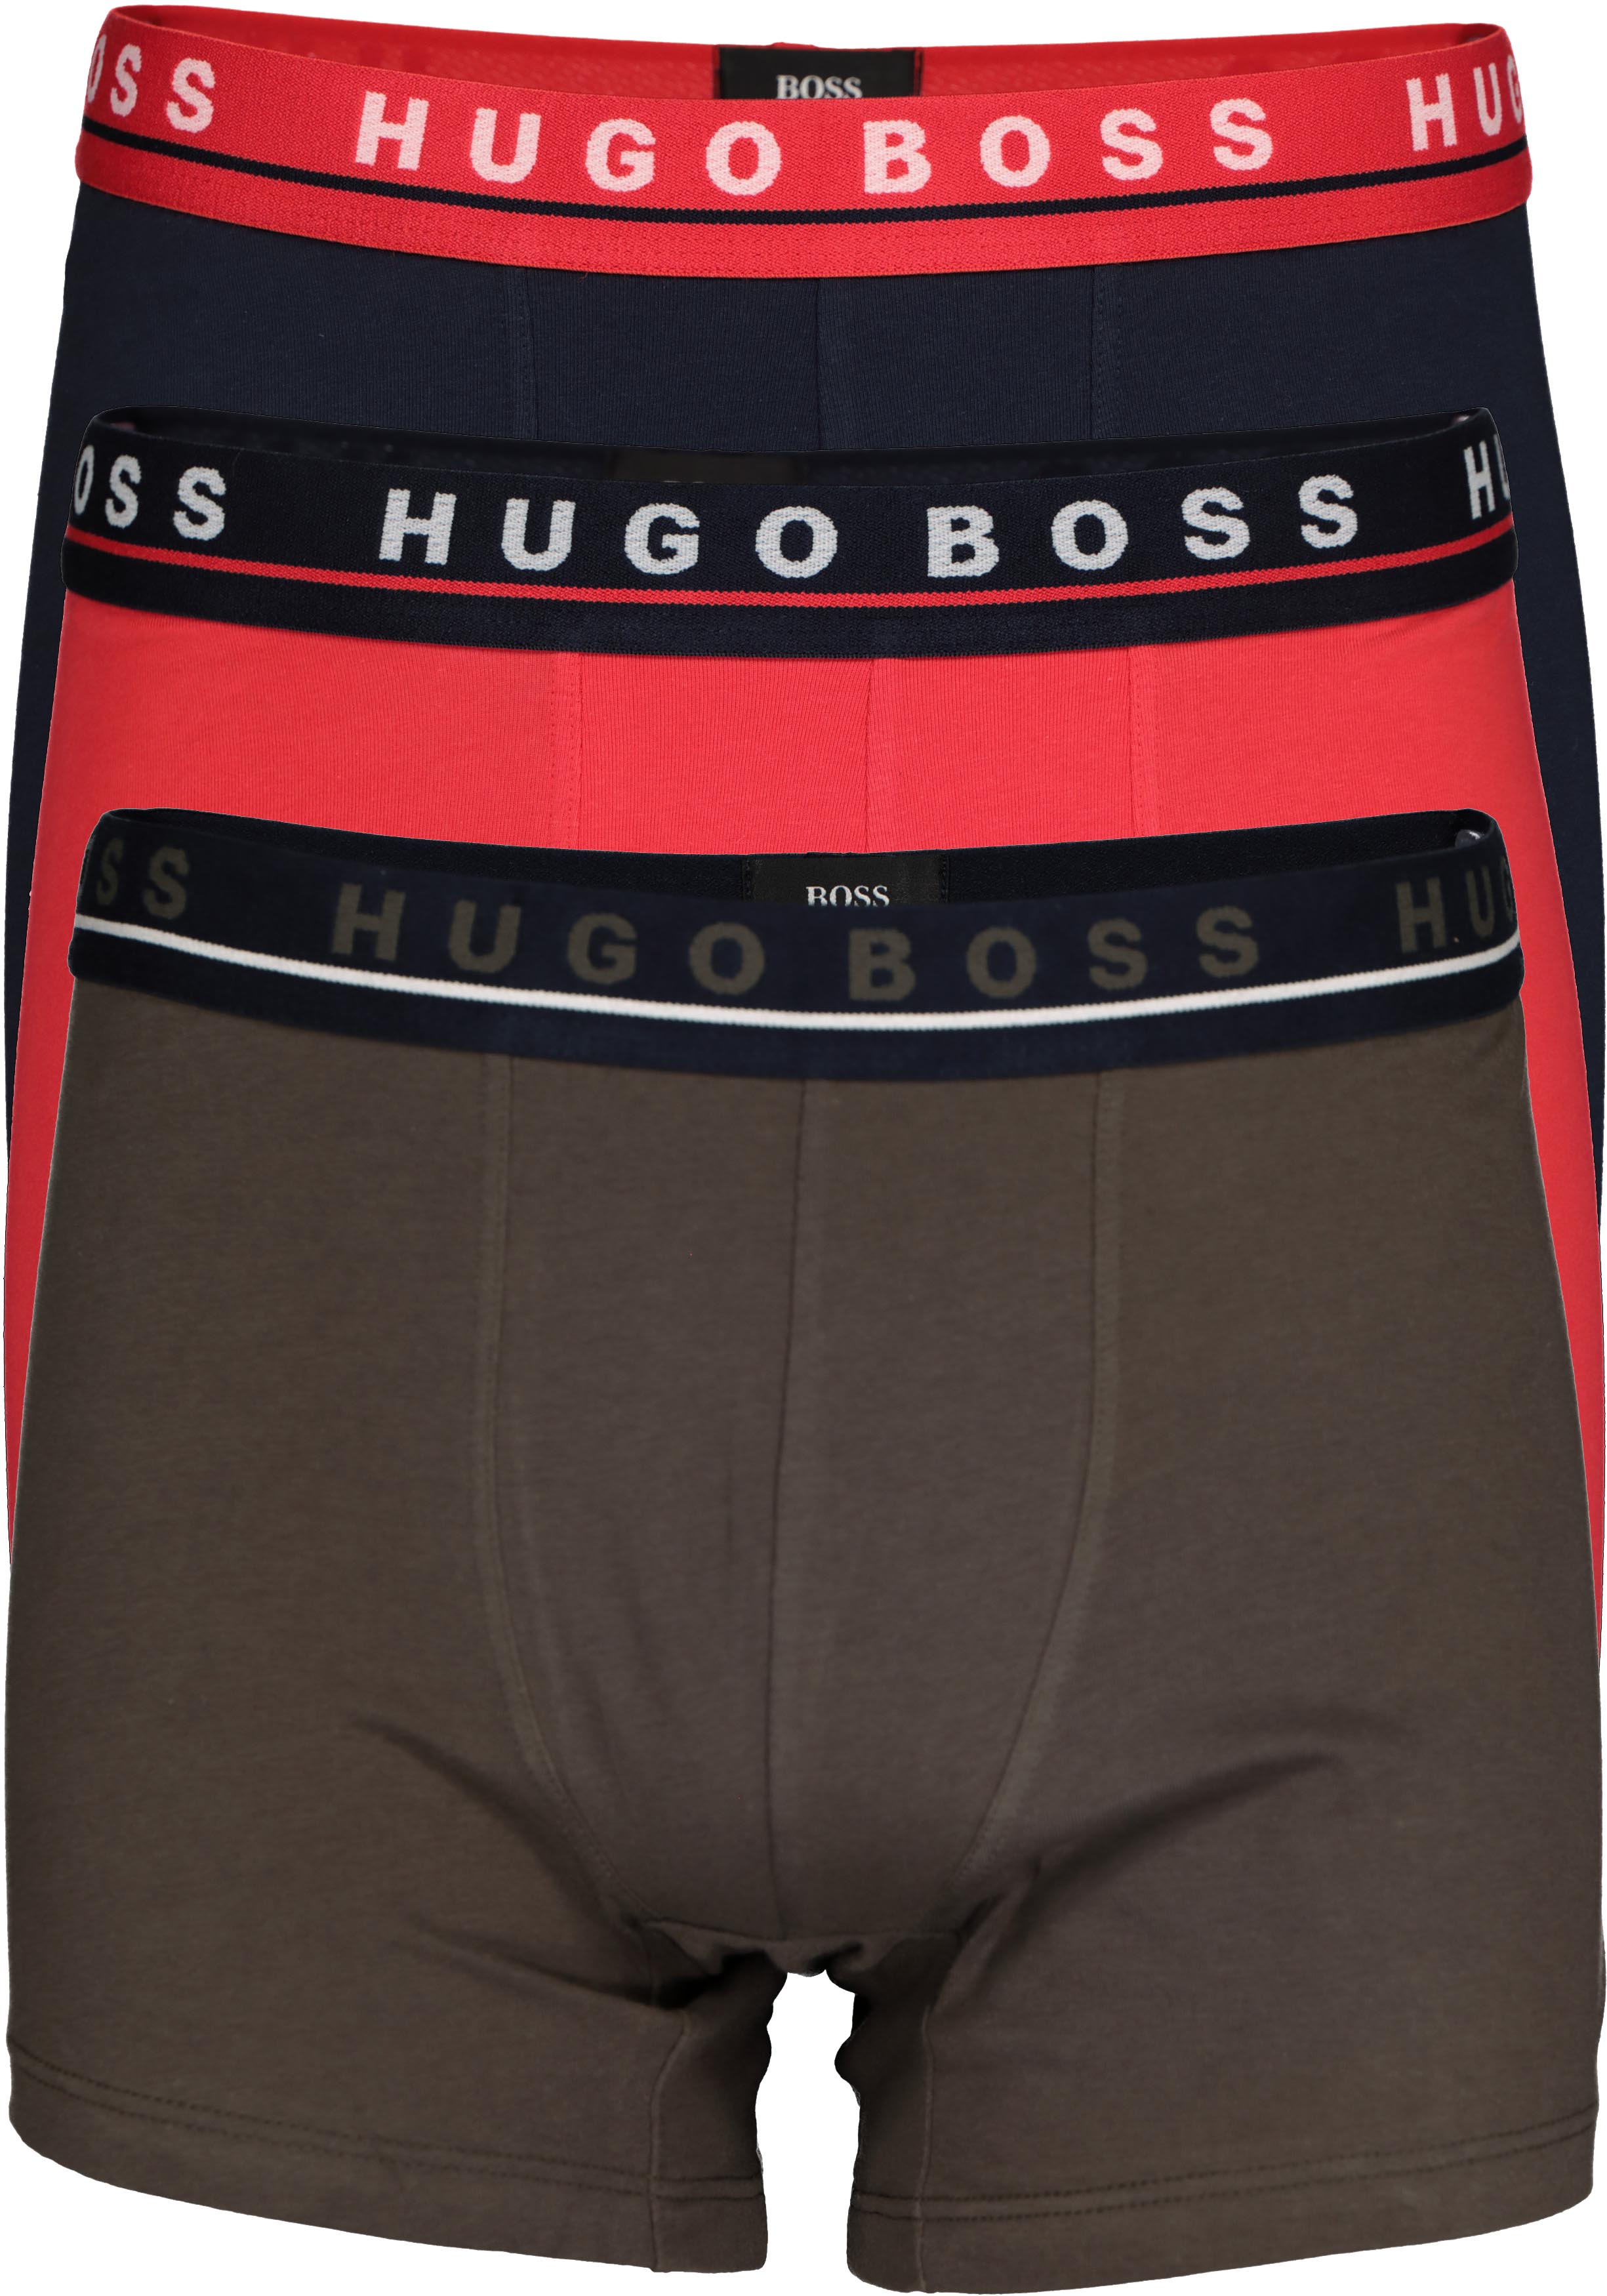 HUGO BOSS boxer brief (3-pack), heren boxers normale lengte, blauw, rood... - SALE tot 50% korting - verzending retour